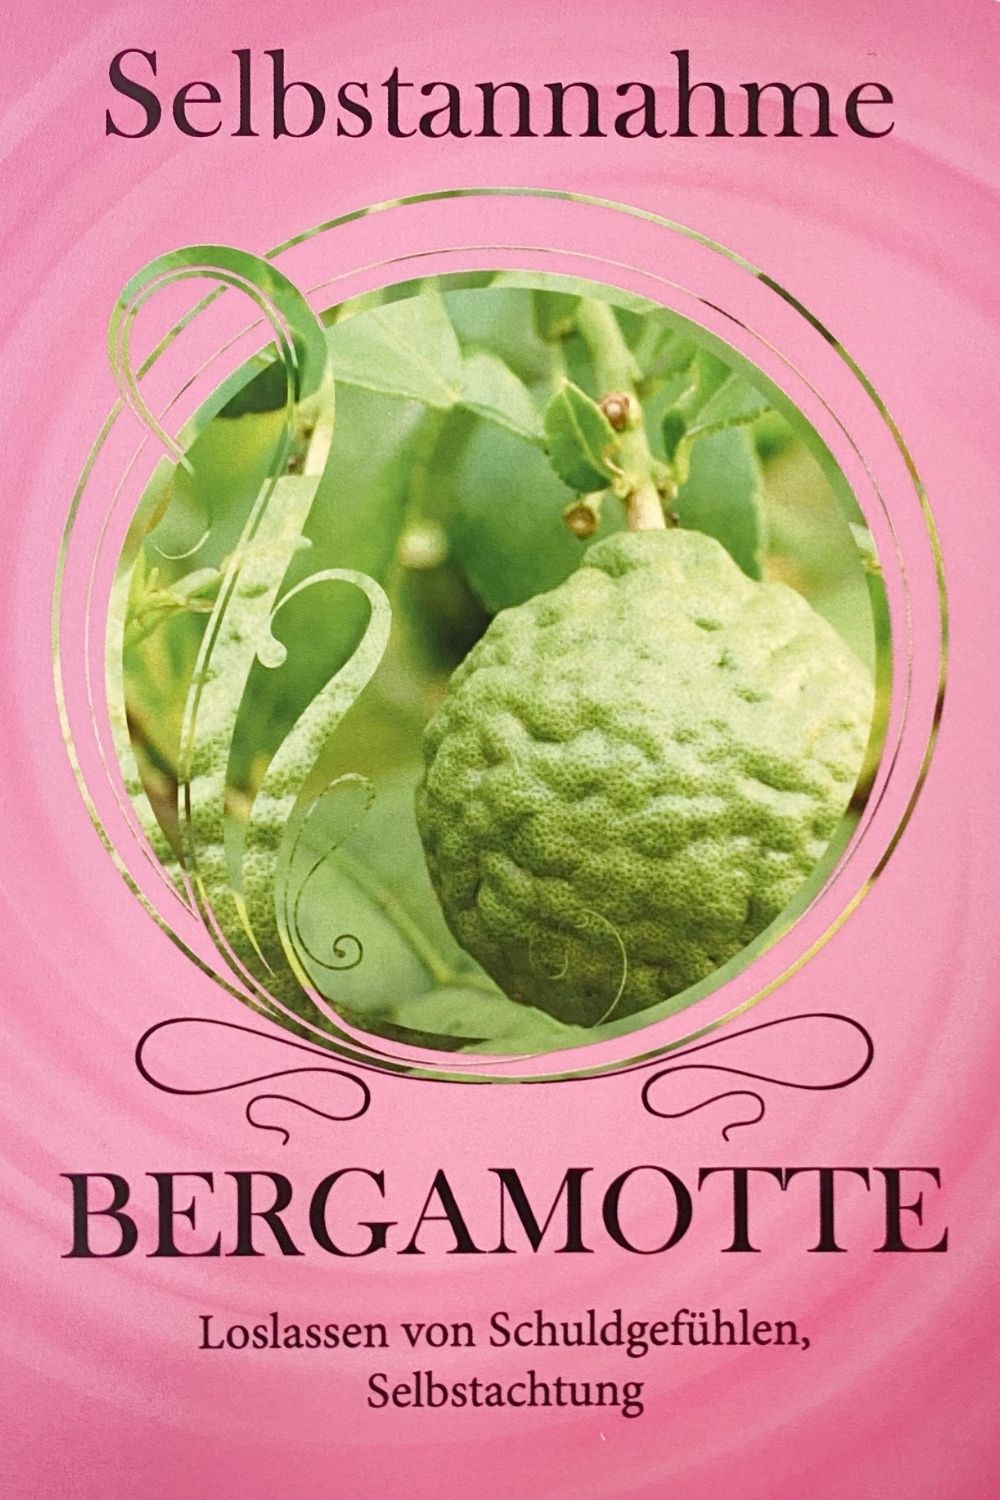 Bergamotte – Öl der Selbstanahme 